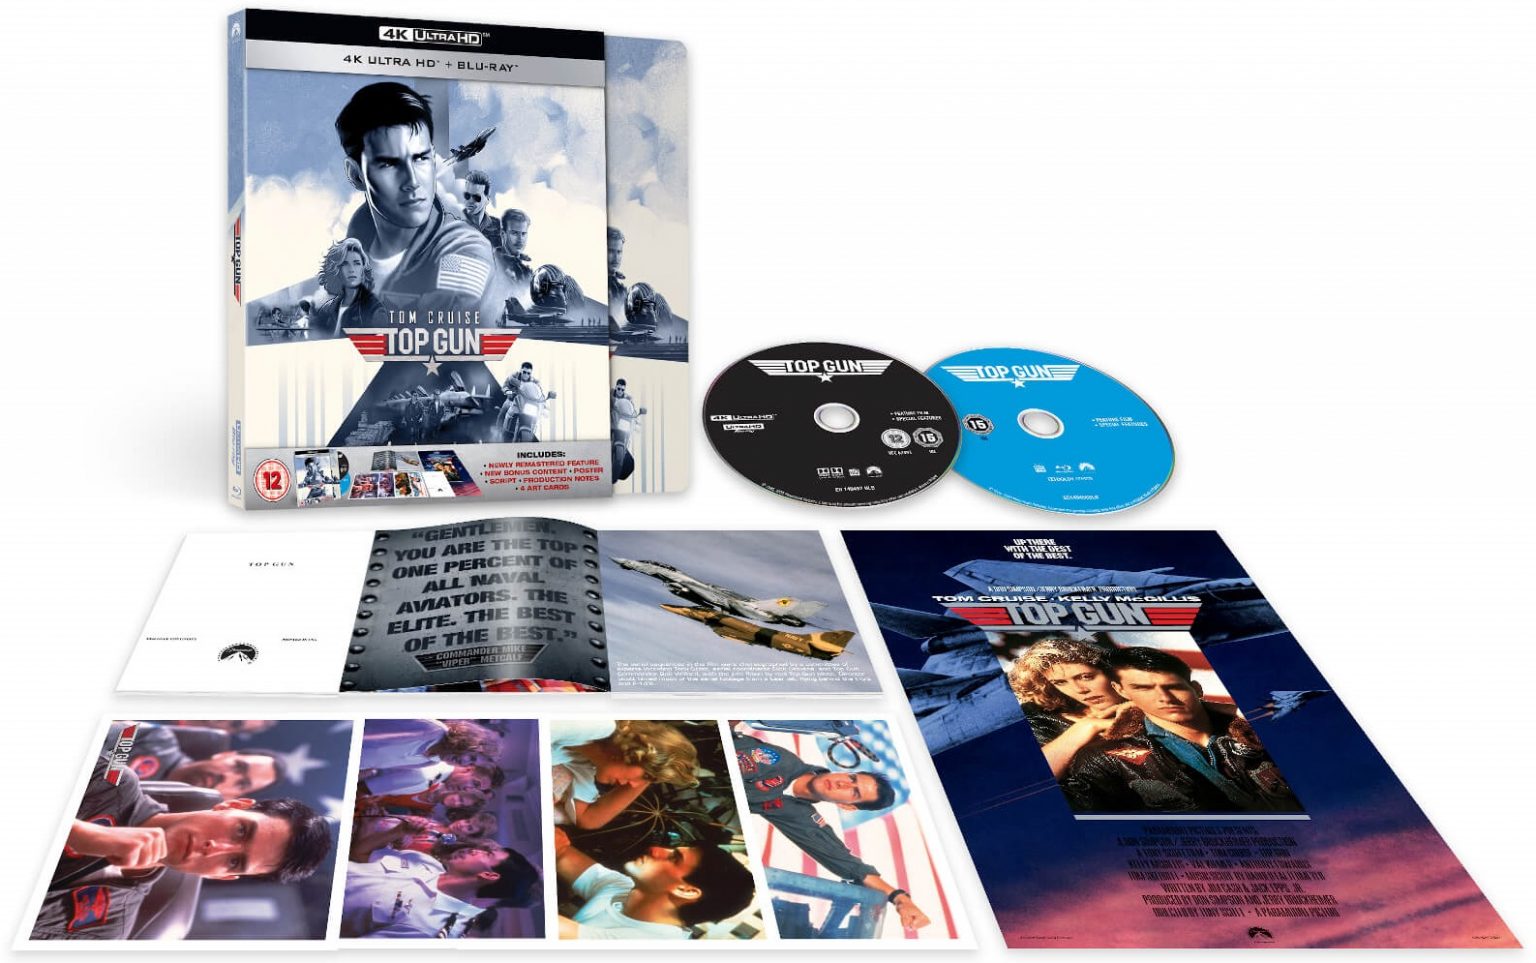 Top Gun 4k 2d Blu Ray Steelbook Zavvi Exclusive Uk Hi Def Ninja Pop Culture Movie Collectible Community